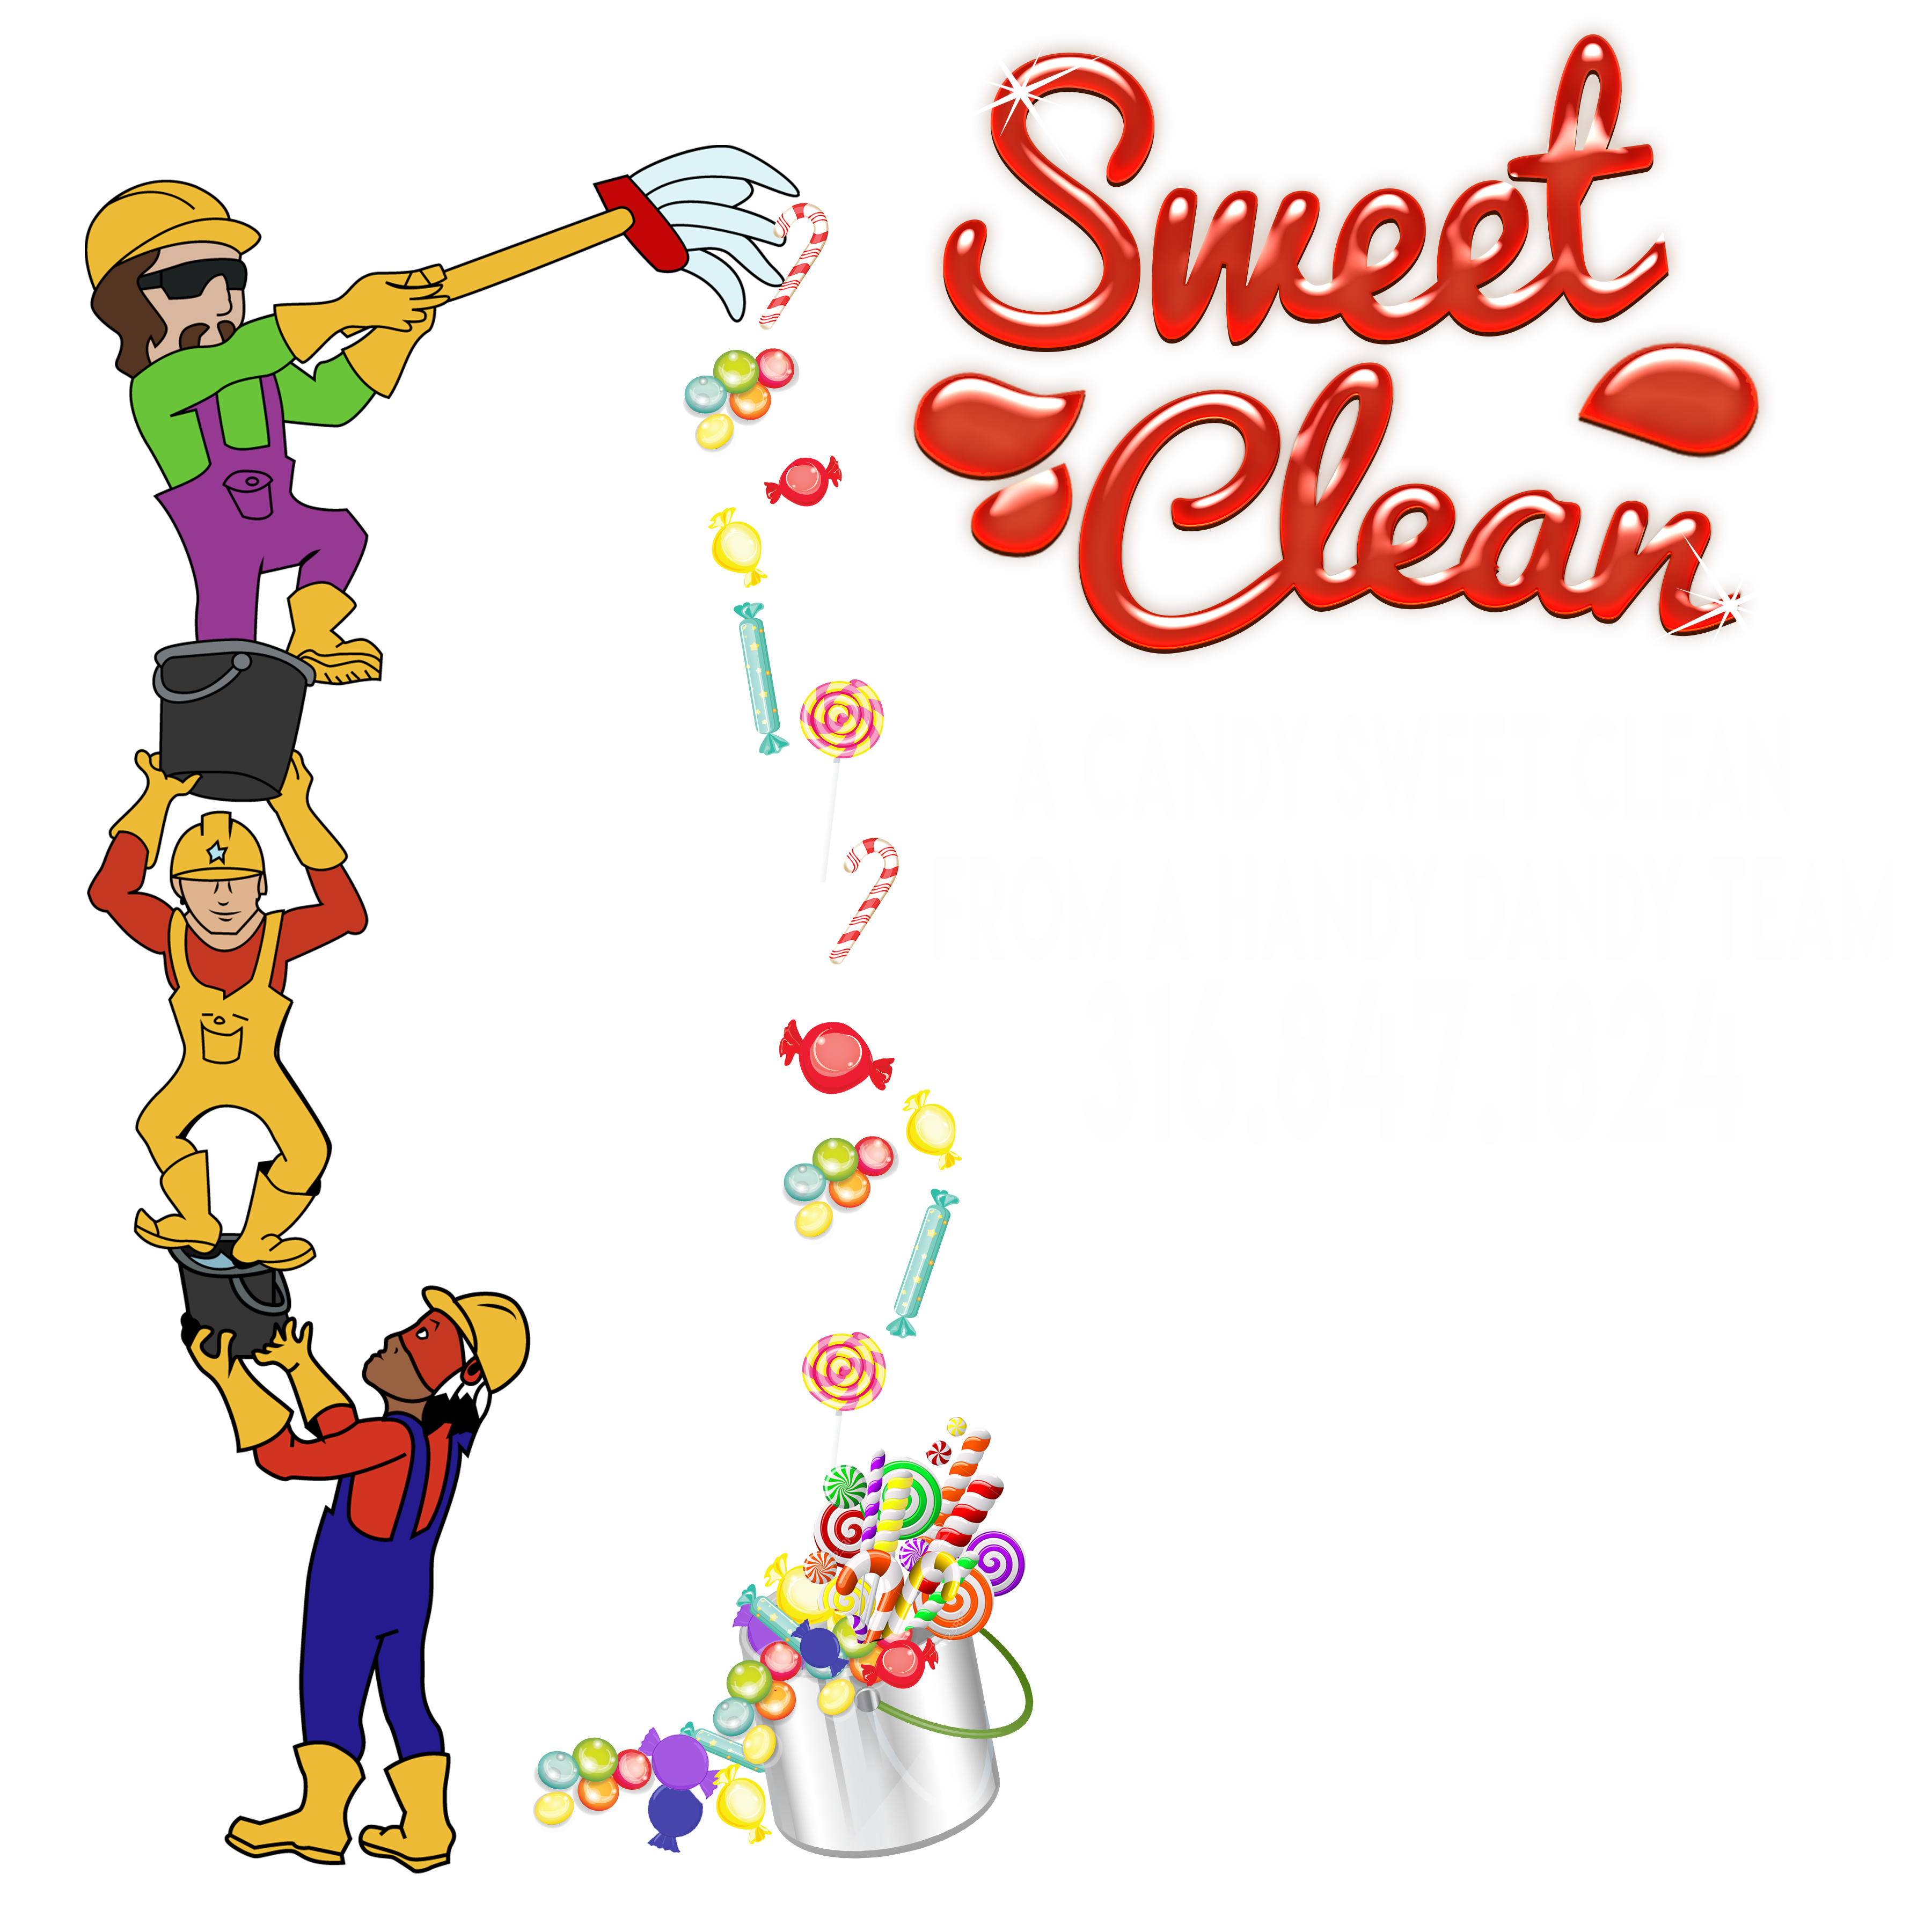 Jean's Sweet Clean, LLC Logo